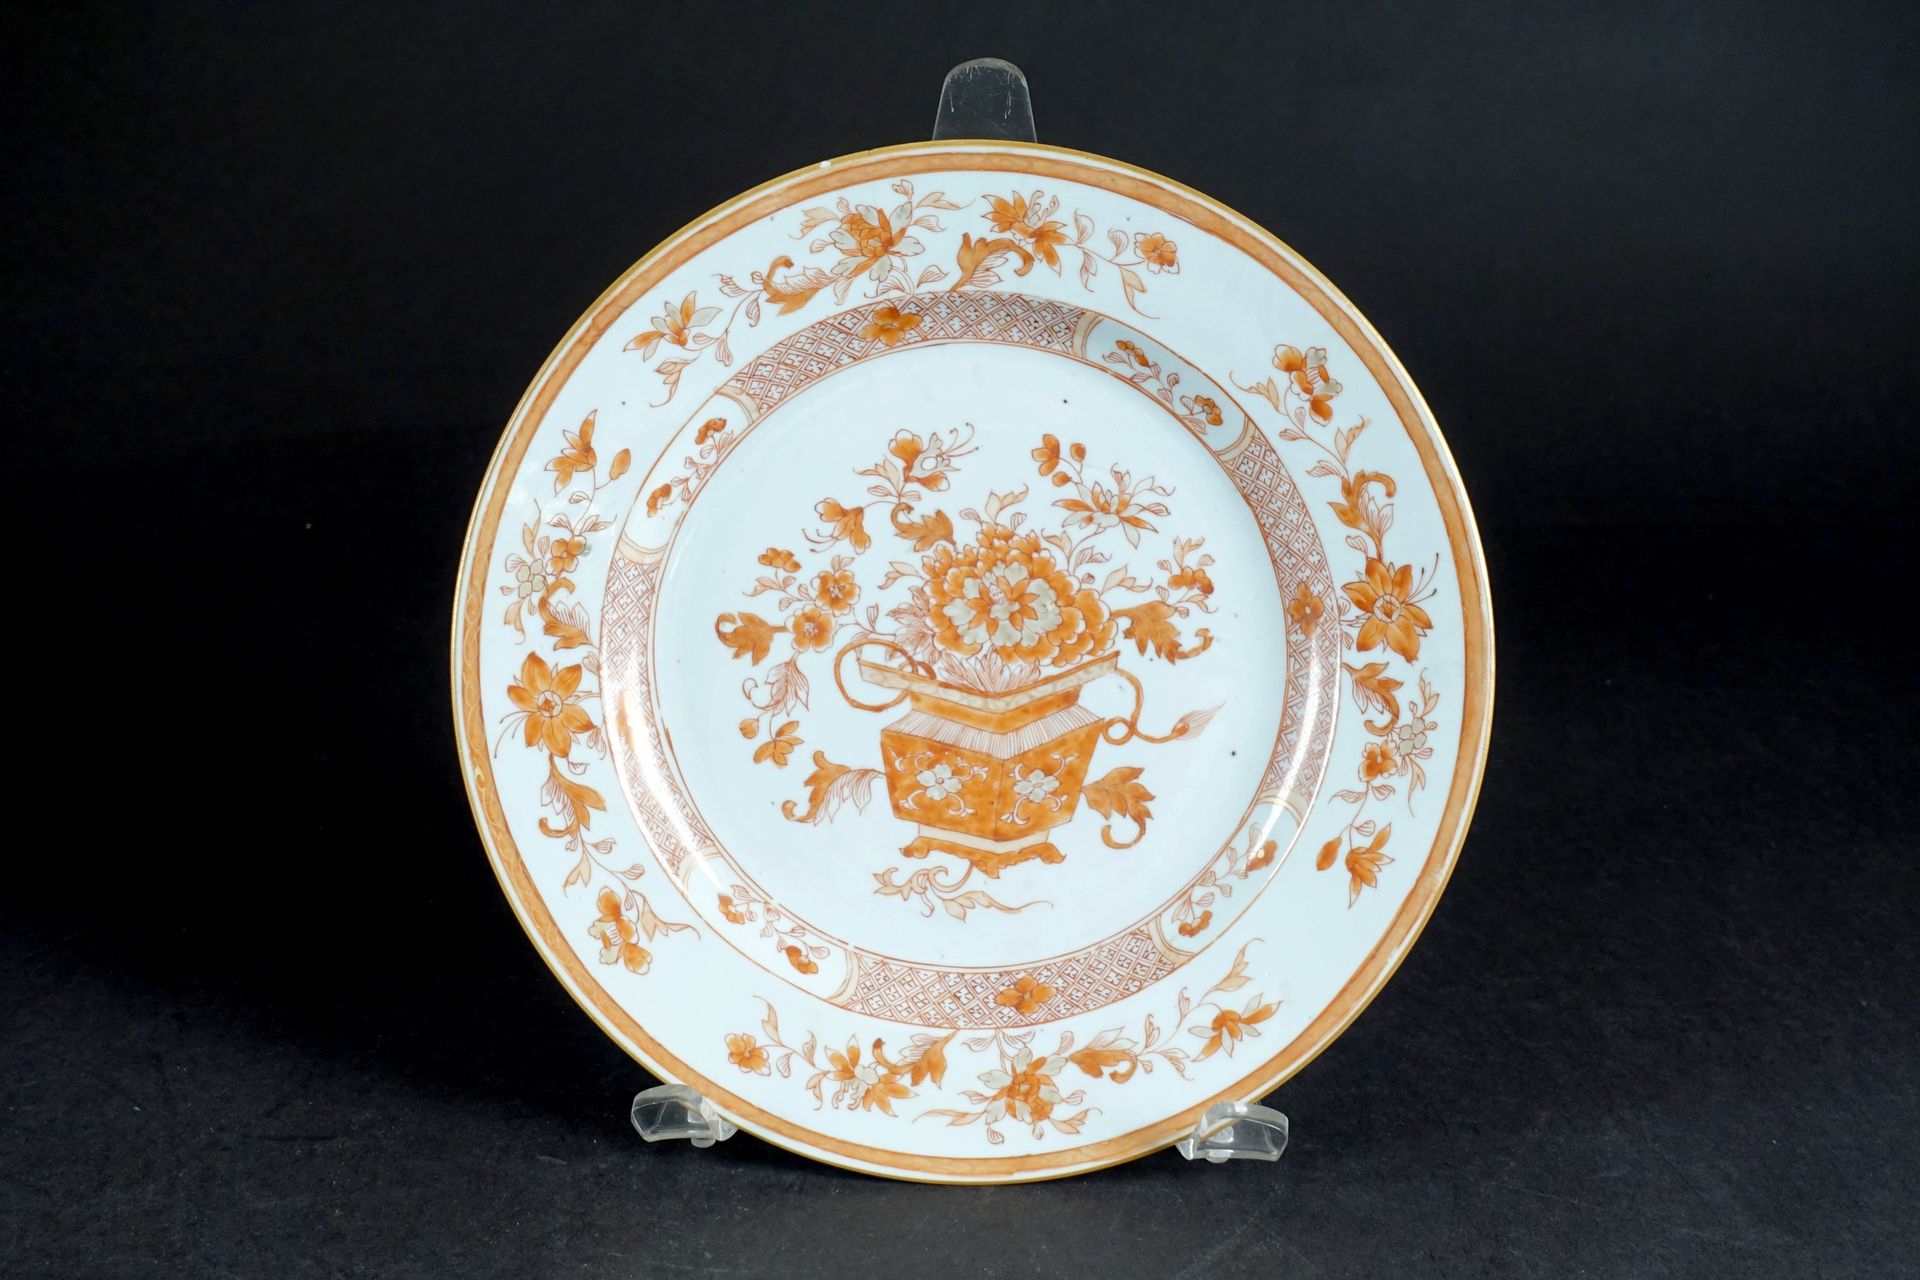 Chine - Période de la Qing Dynasty du XVIIIe siècle. Round dish with a central d&hellip;